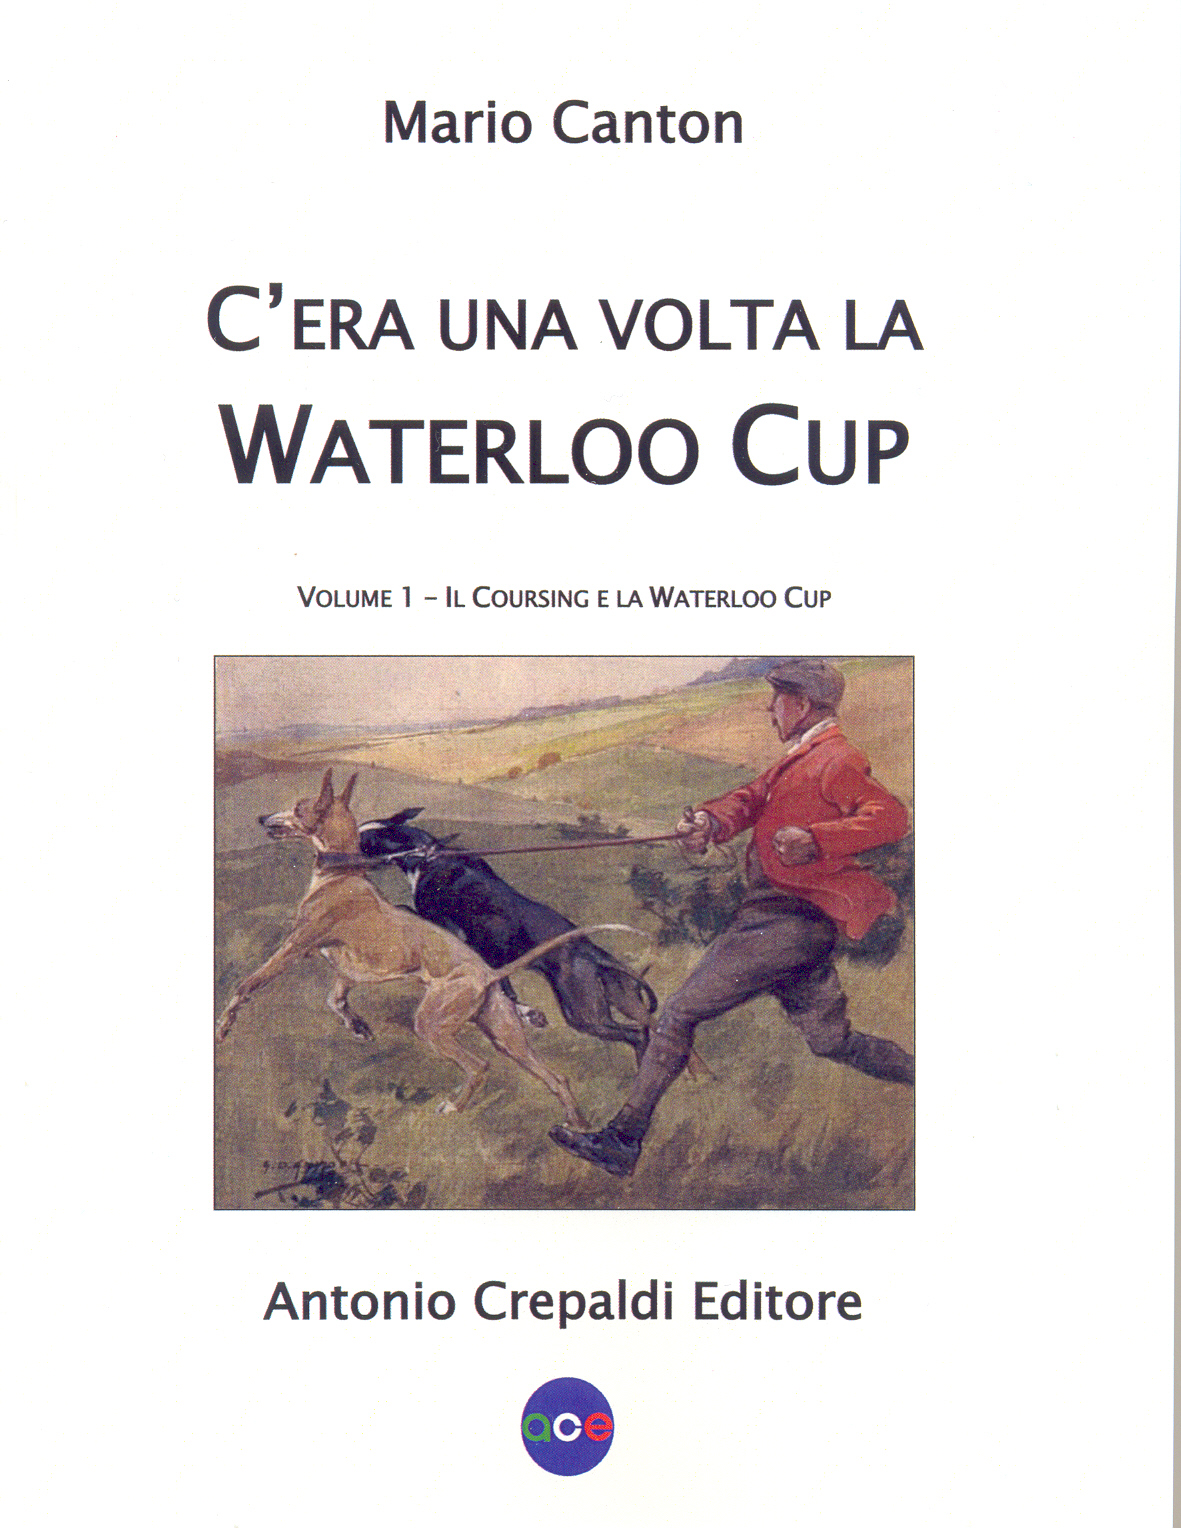 Libro Waterloo copertina vol1